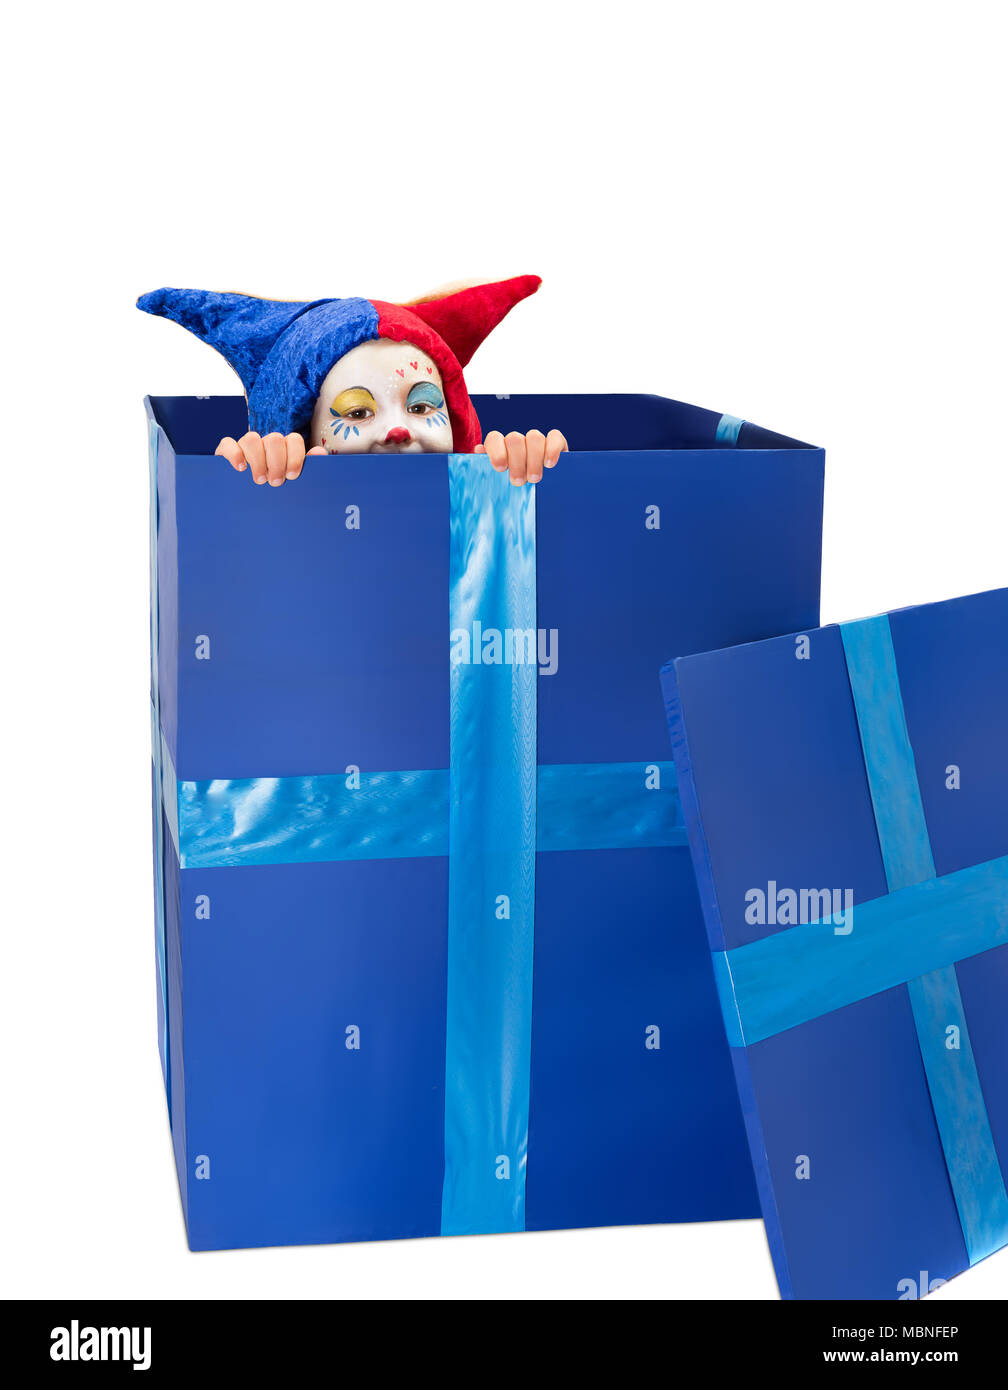 Peek-a-boo girl in a blue box dressed up like a clown Stock Photo